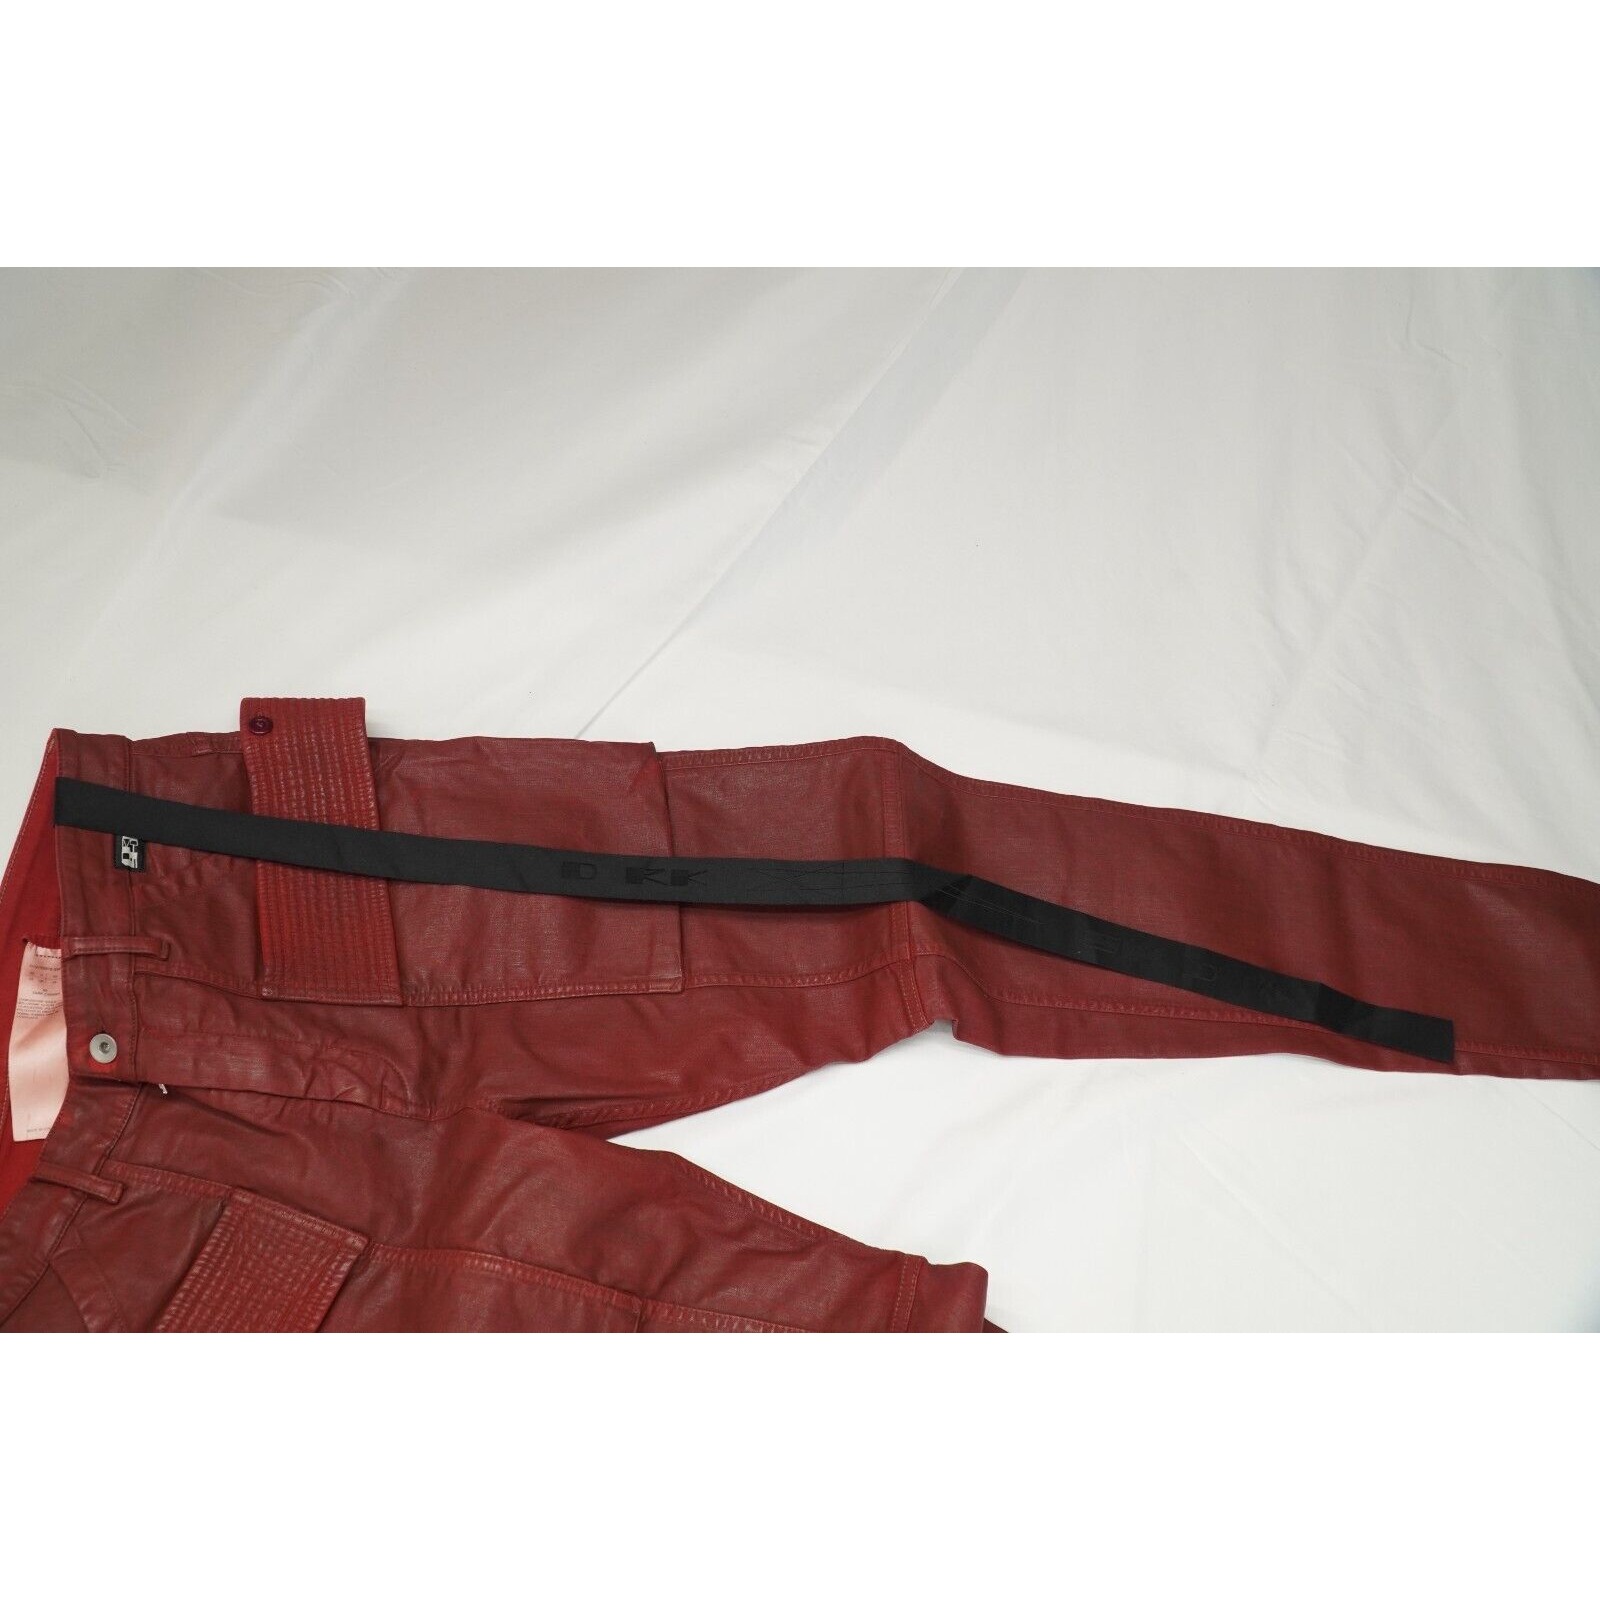 SS21 Easy Creatch Cut 33 Wax Trouser Cargo Pants Dark Cherry - 21